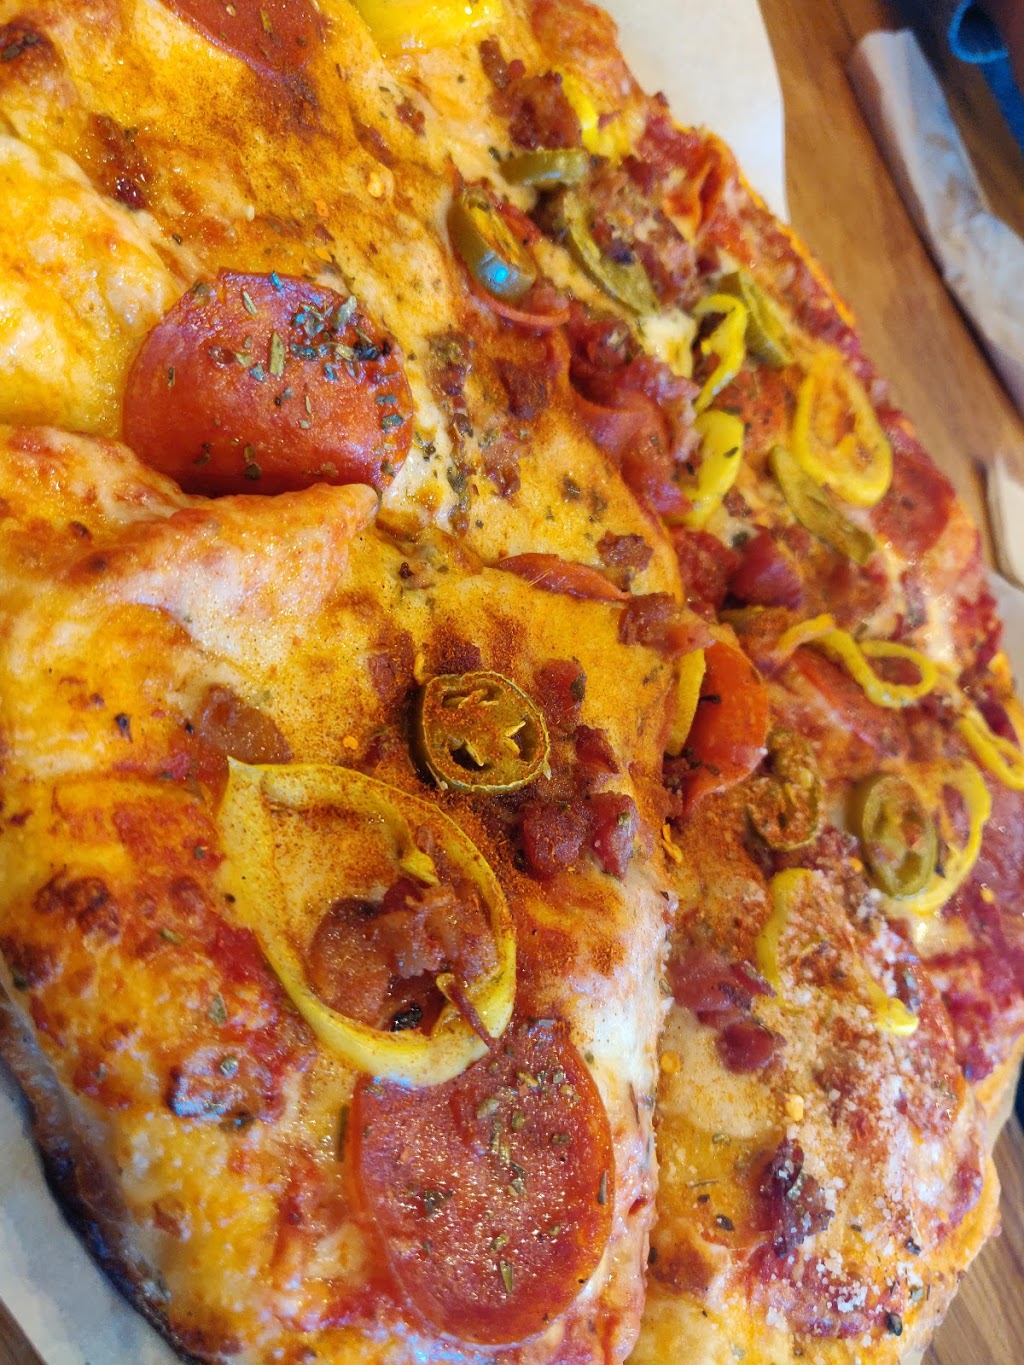 Blaze Pizza | 2015 Birch Rd, Chula Vista, CA 91915 | Phone: (619) 632-5205